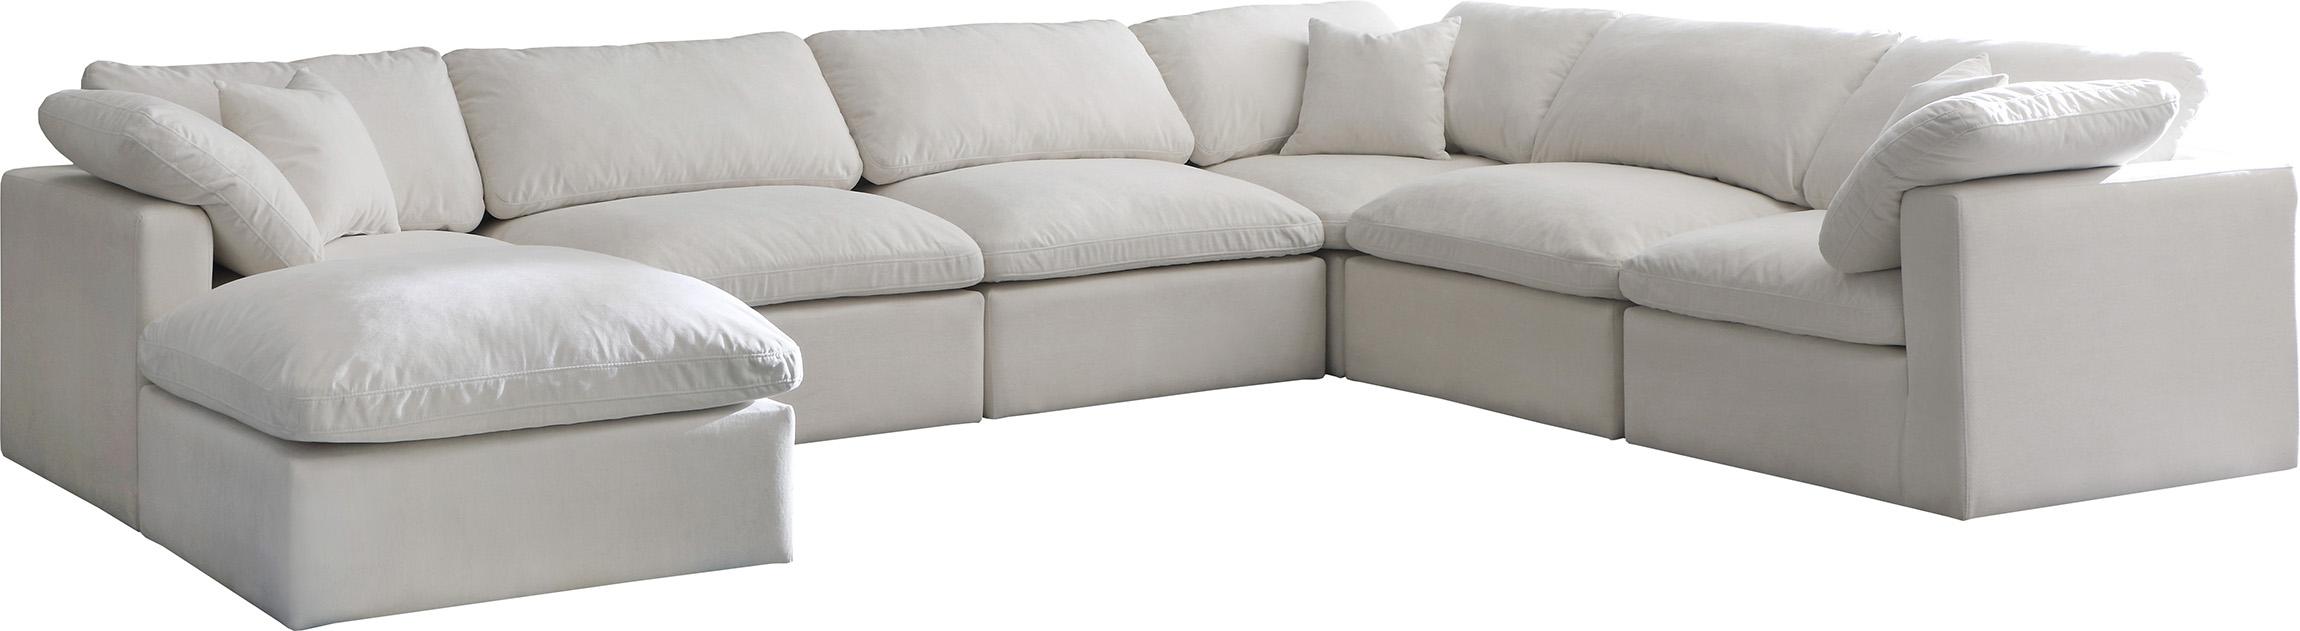 Contemporary, Modern Modular Sectional Sofa 602Cream-Sec7A 602Cream-Sec7A in Cream Fabric